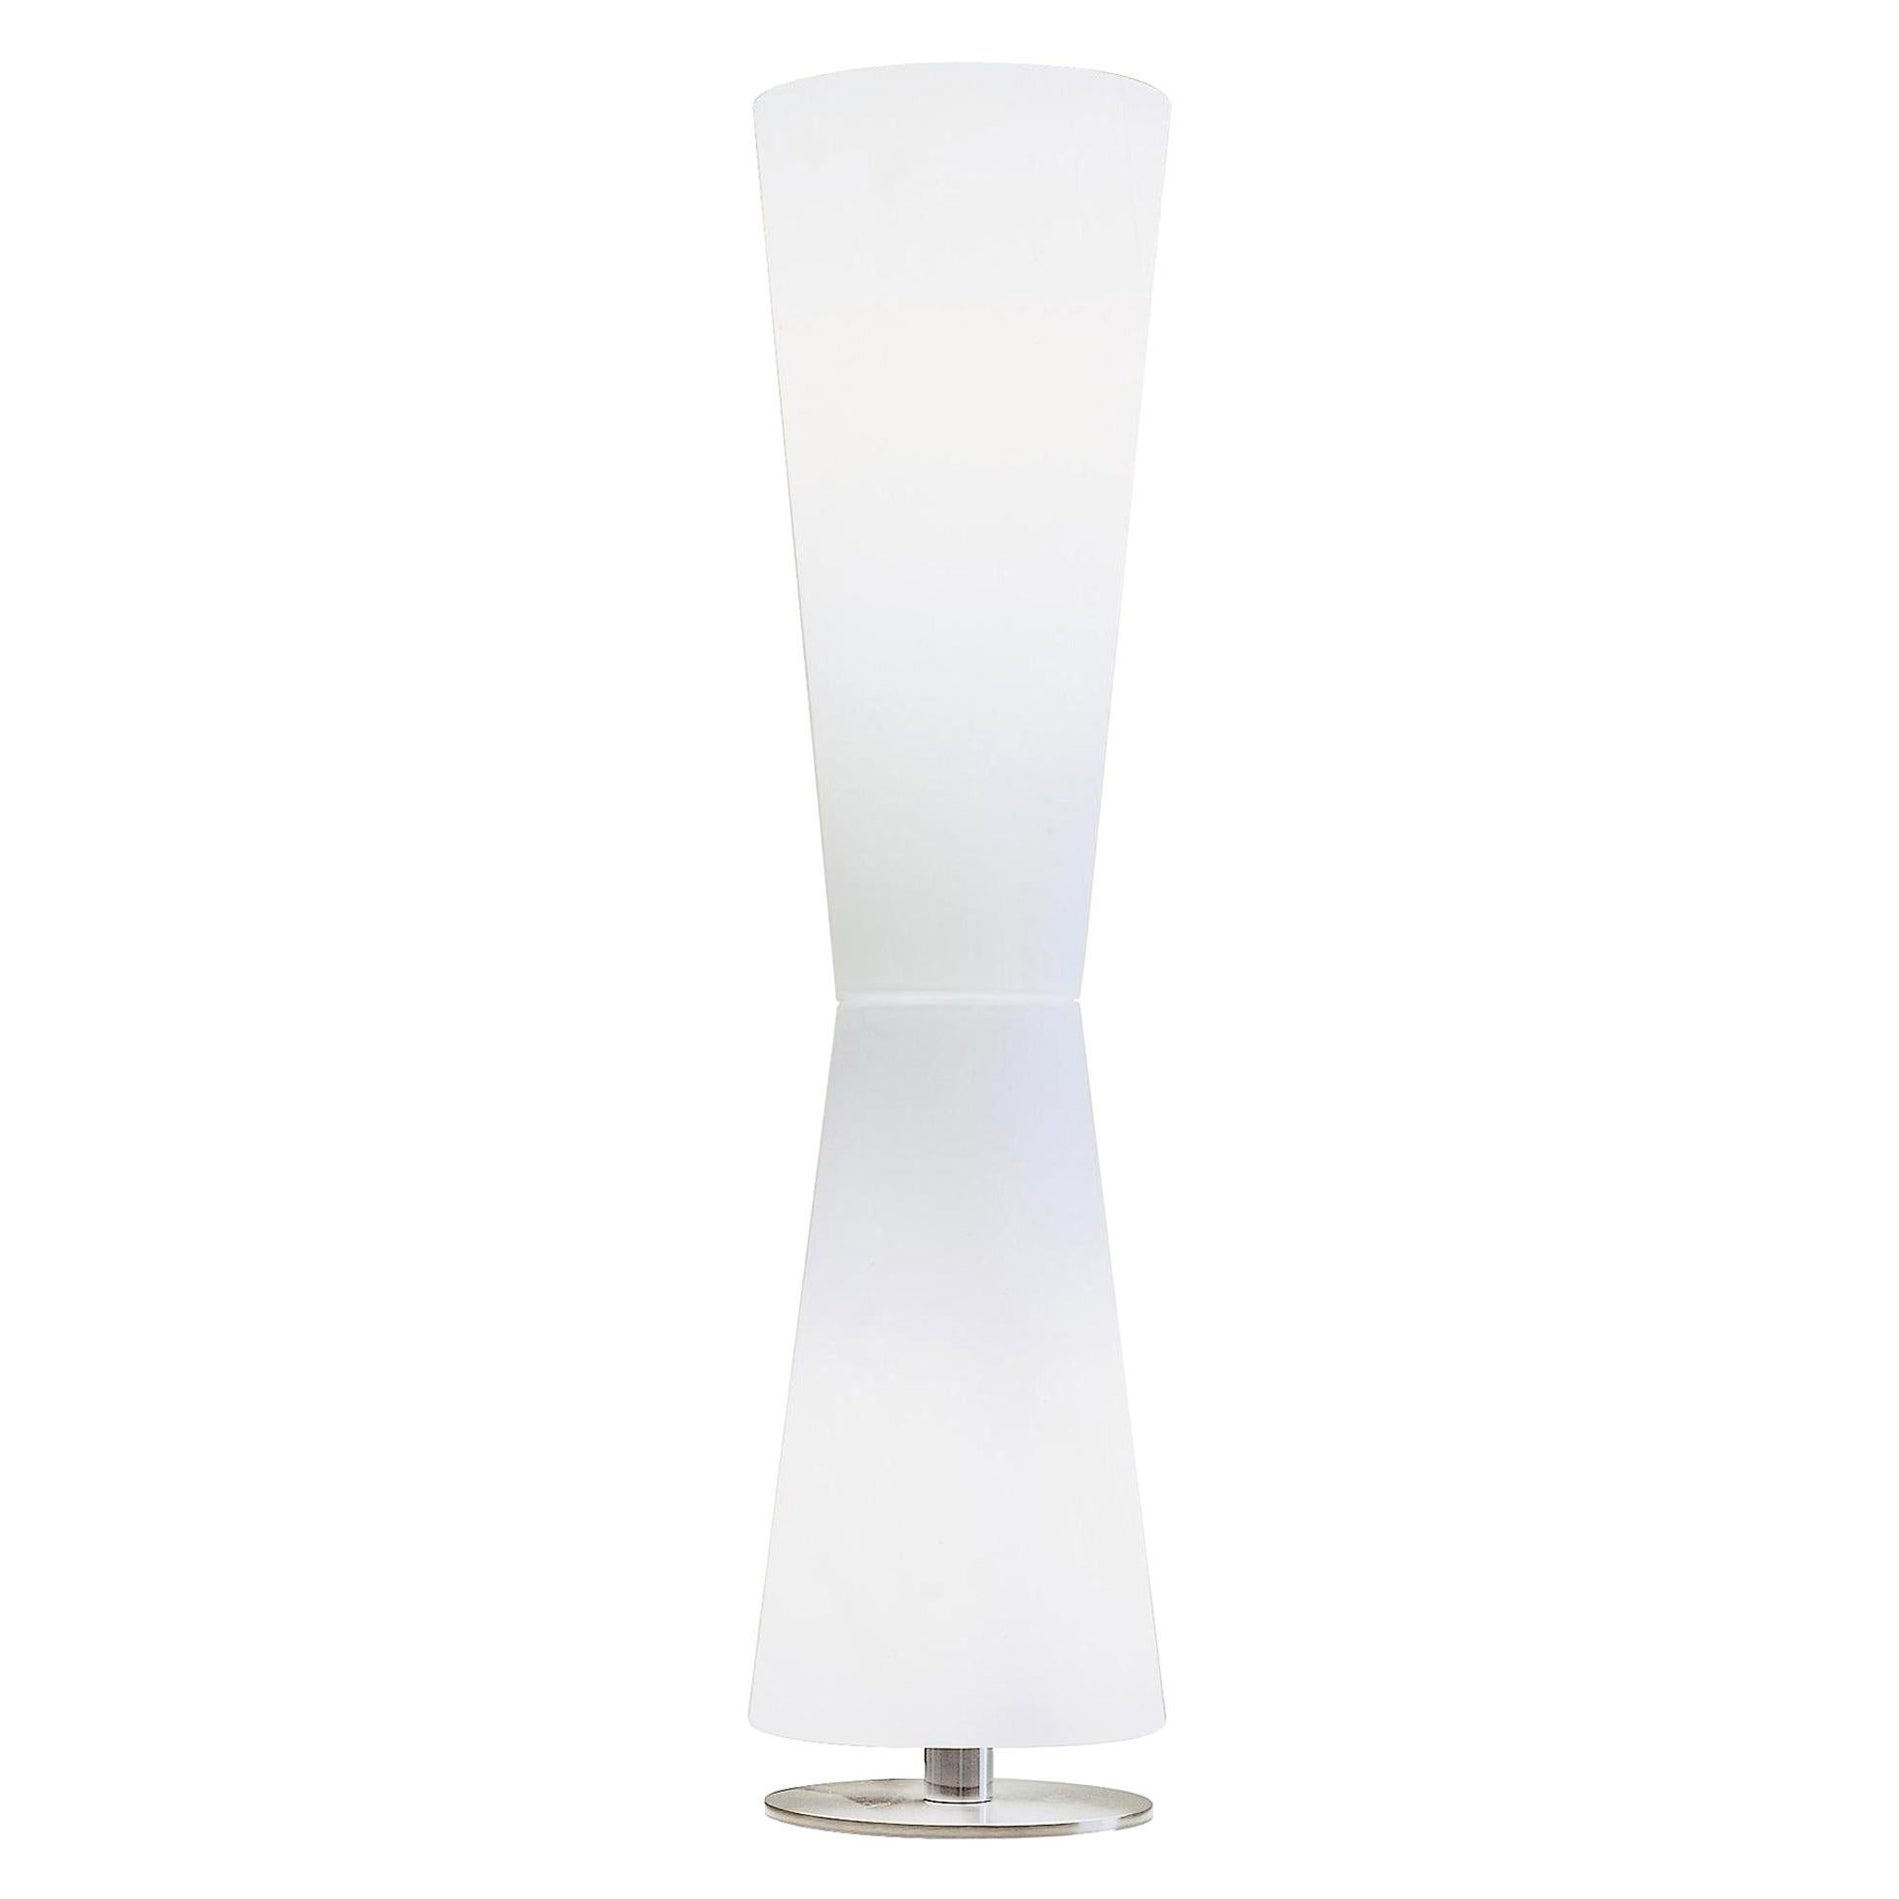 Stefano Casciani Table Lamp 'Lu-Lu' Murano Glass by Oluce For Sale